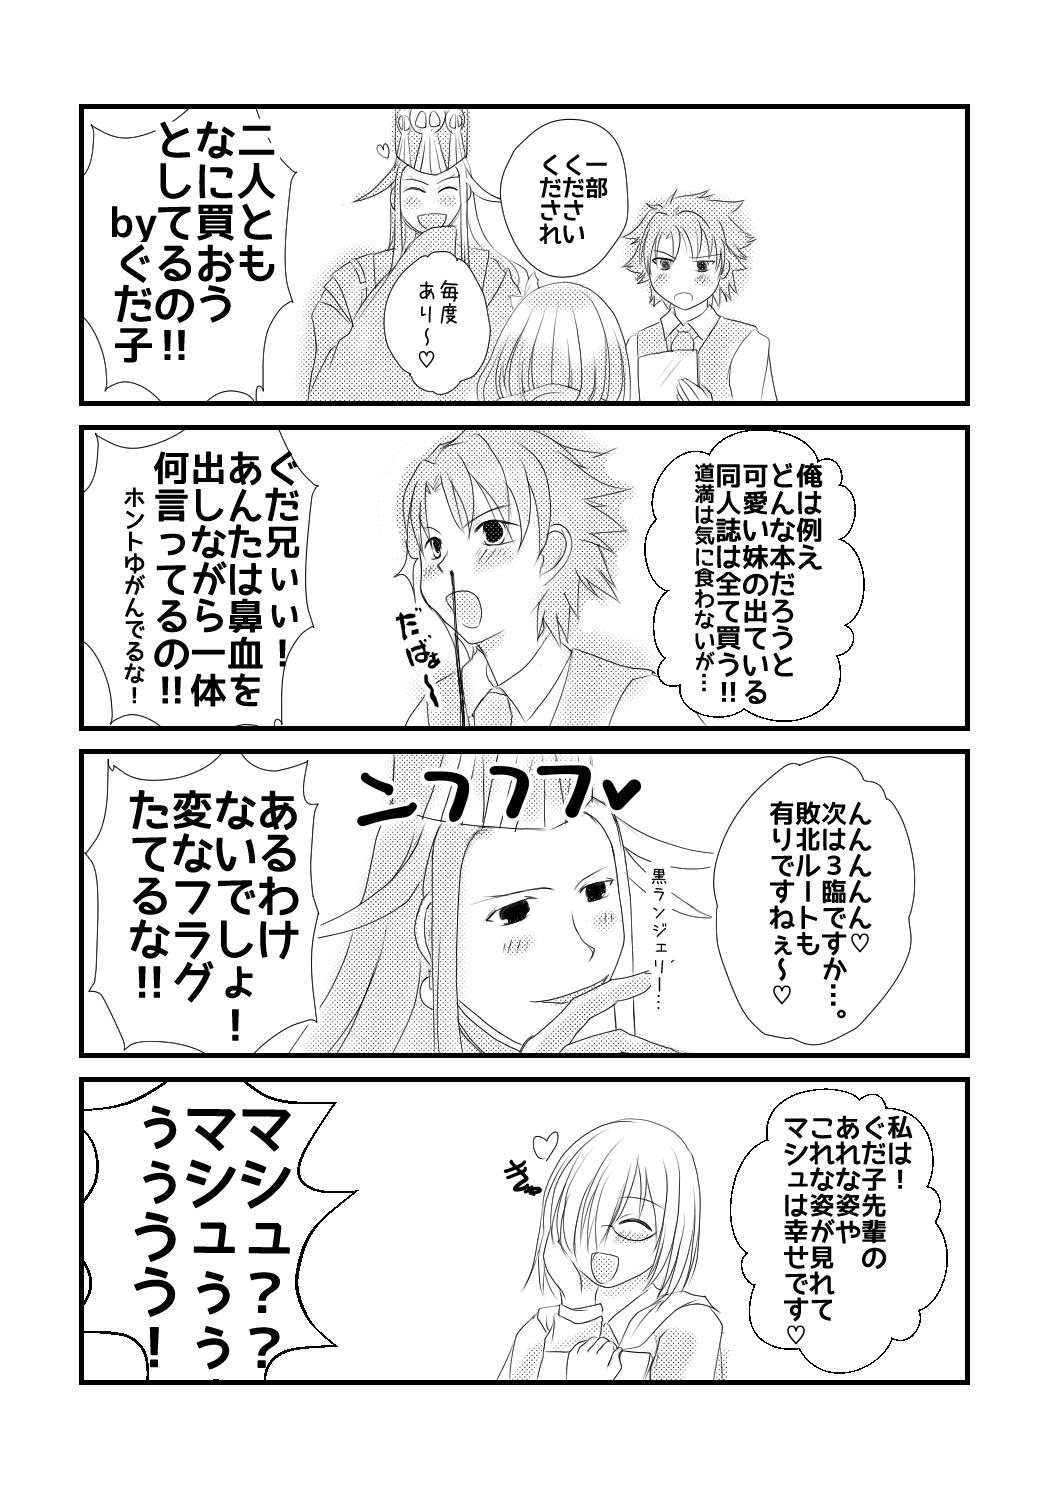 Tgirl ] Rin guda ♀ rakugaki guda yuru manga(Fate/Grand Order] - Fate grand order Masturbates - Page 7